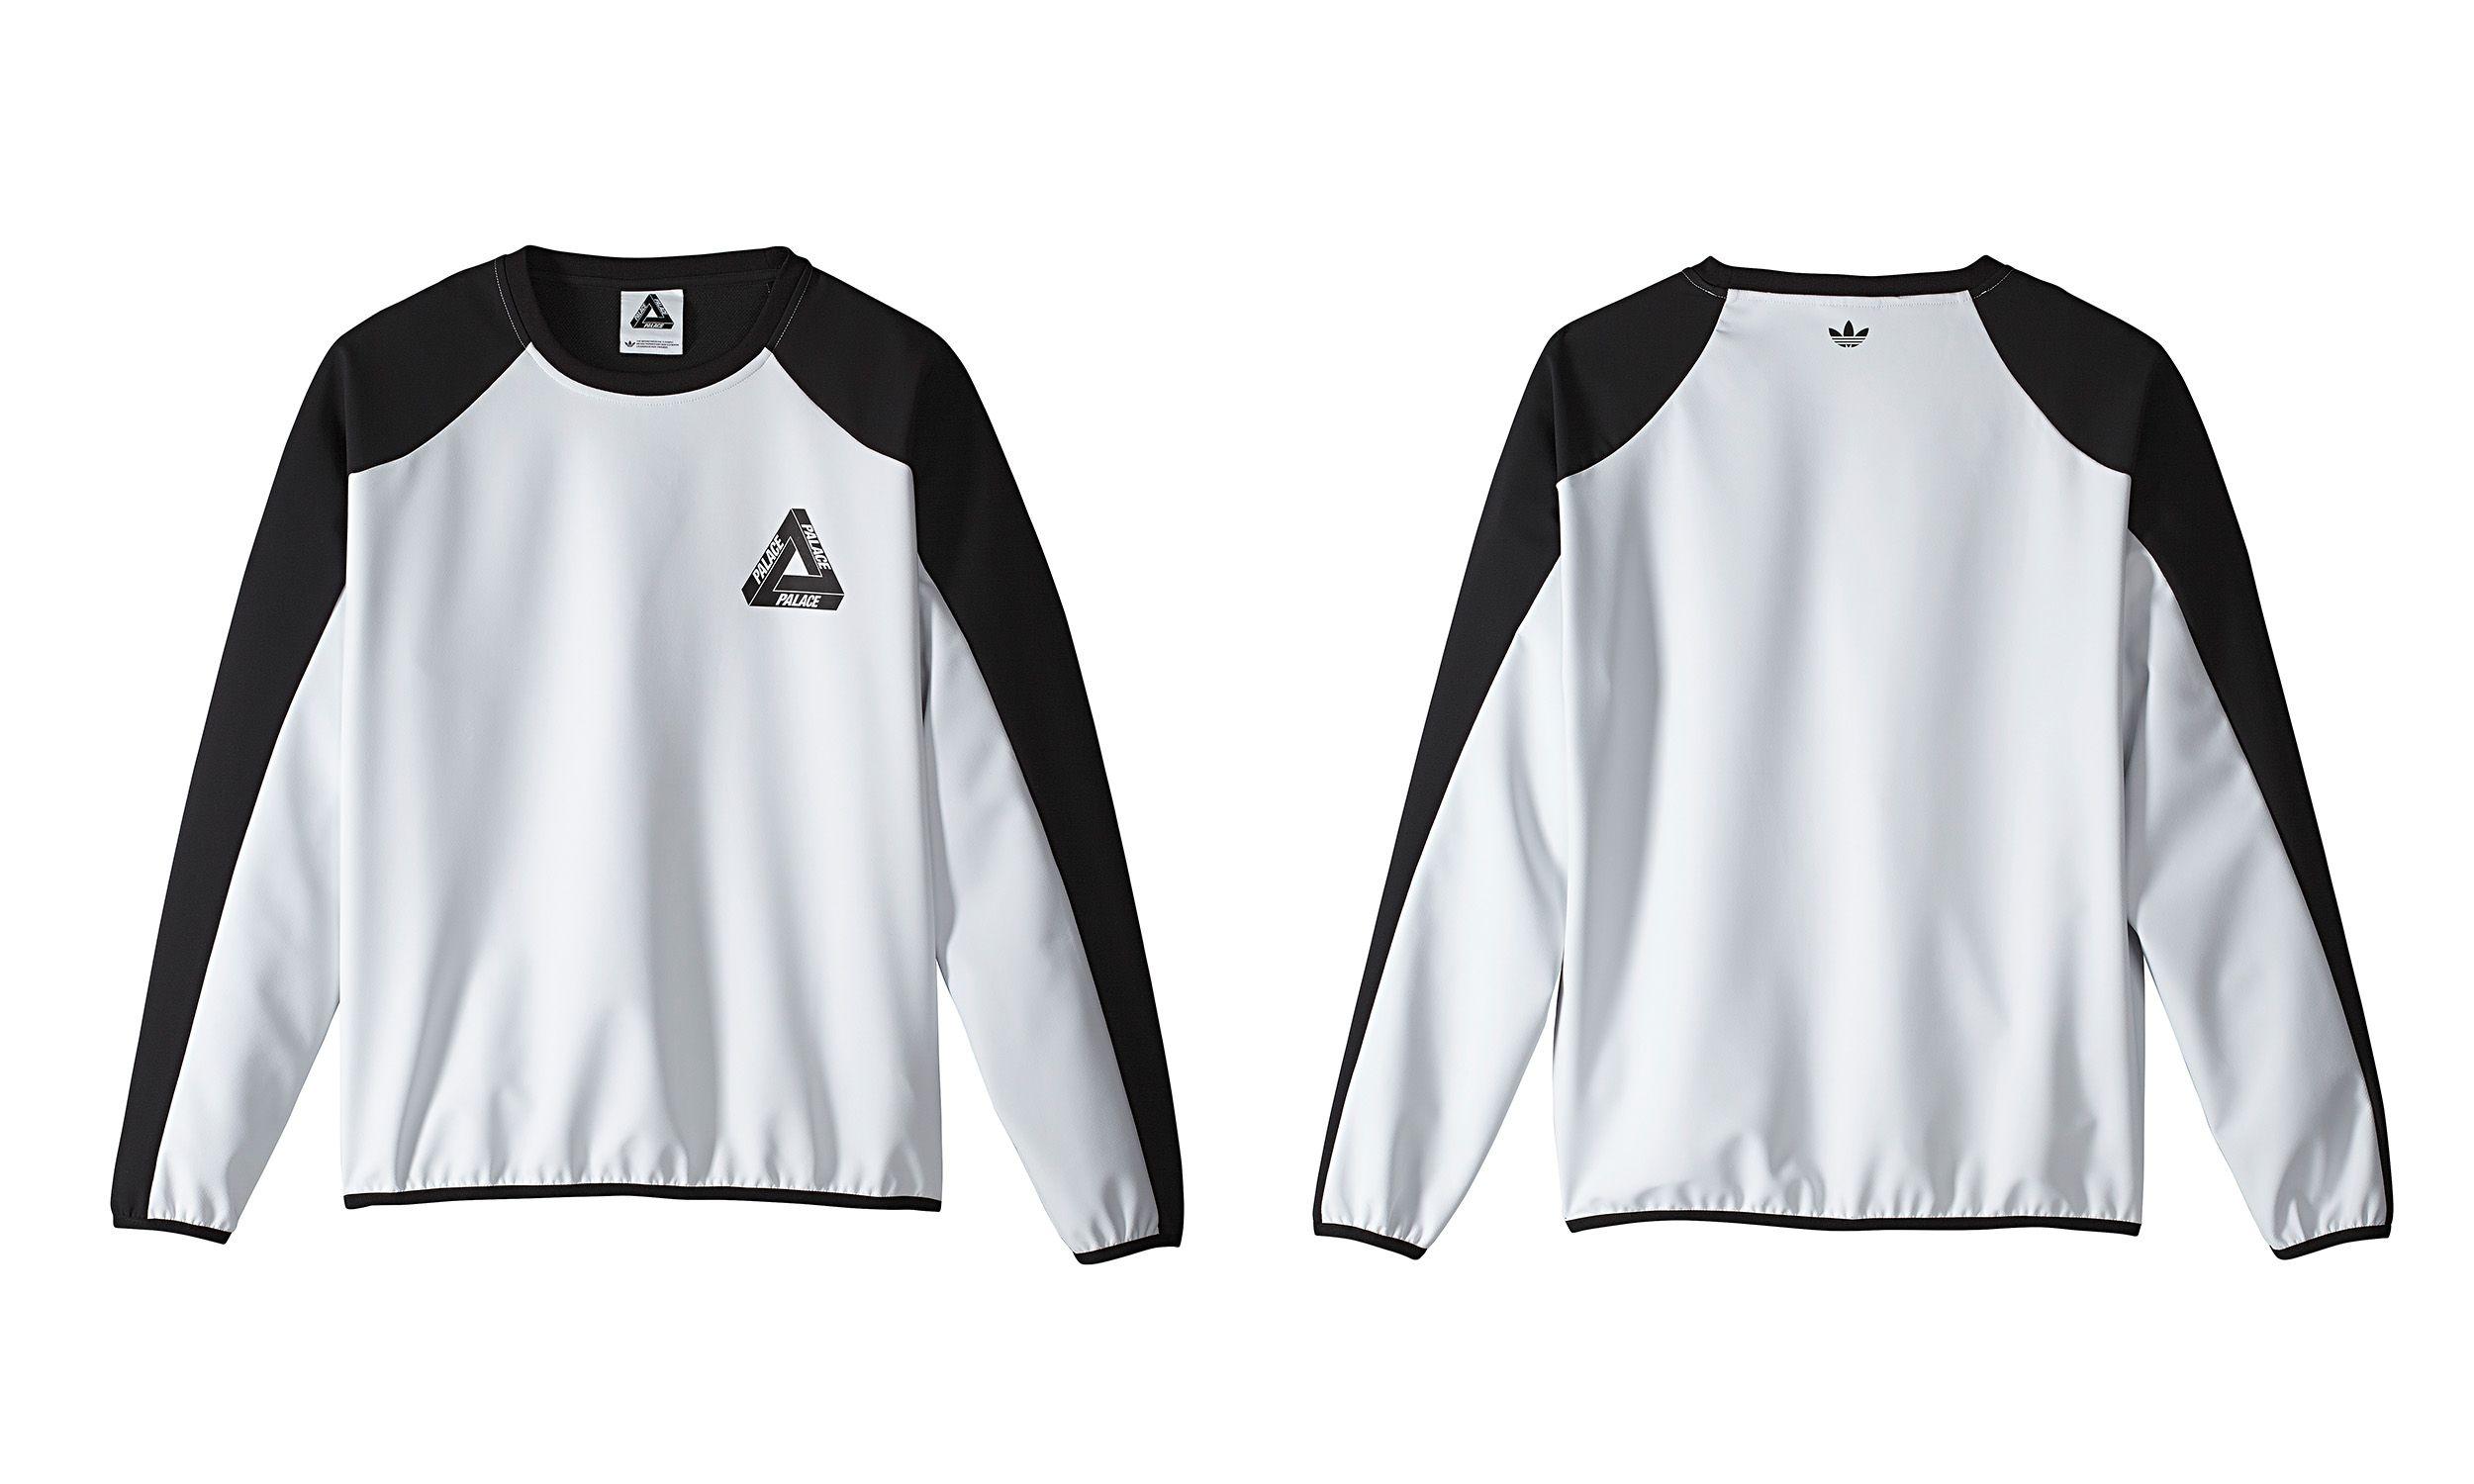 Adidas X Palace Clothing Logo - A Closer Look At The Palace Skateboards X Adidas Originals F W 2015